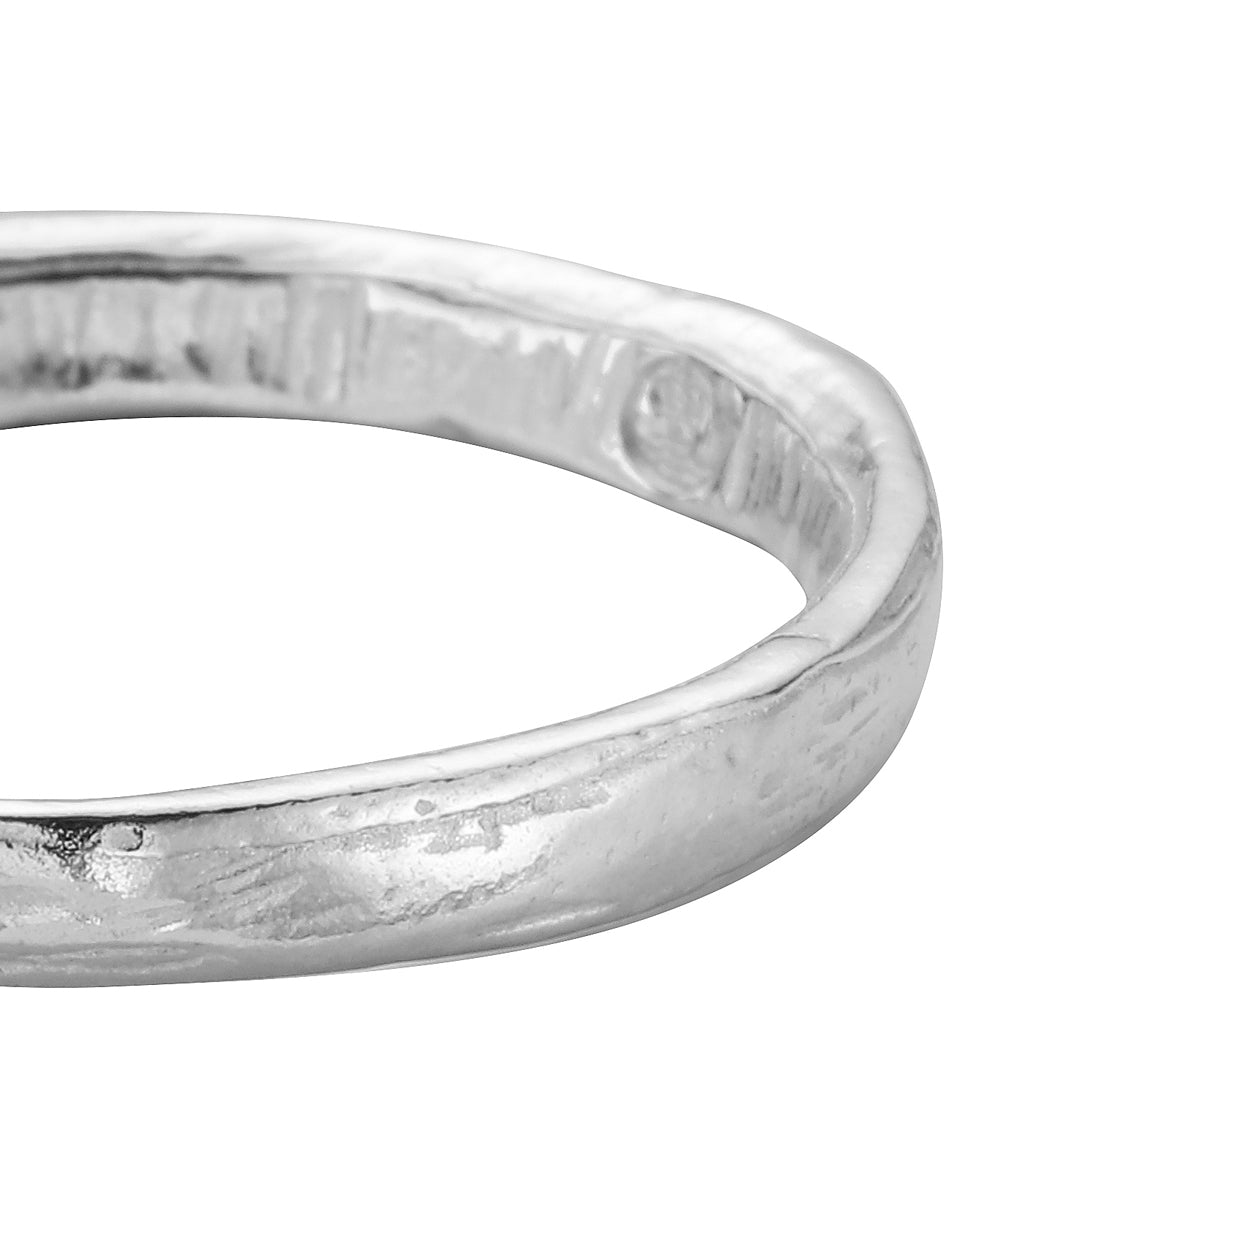 Men's Silver Mini Posey Ring